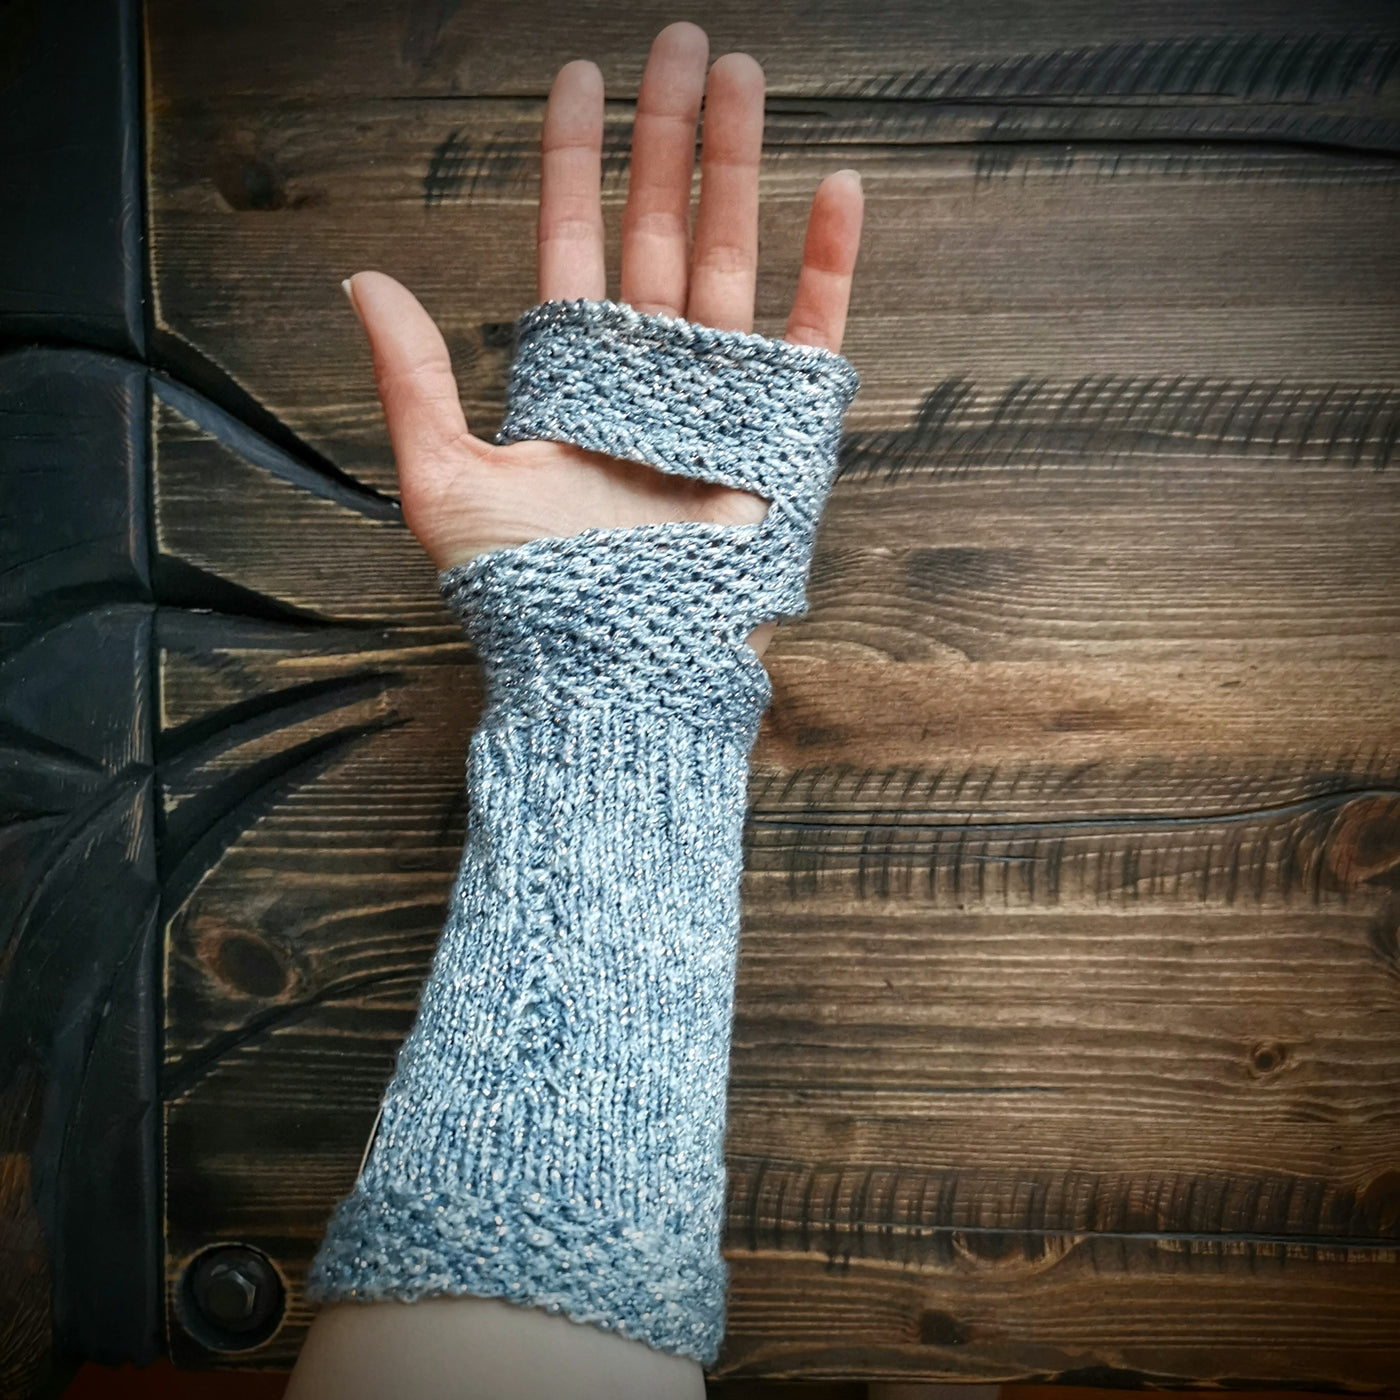 Handmade knitted sparkling blue wrist warmers